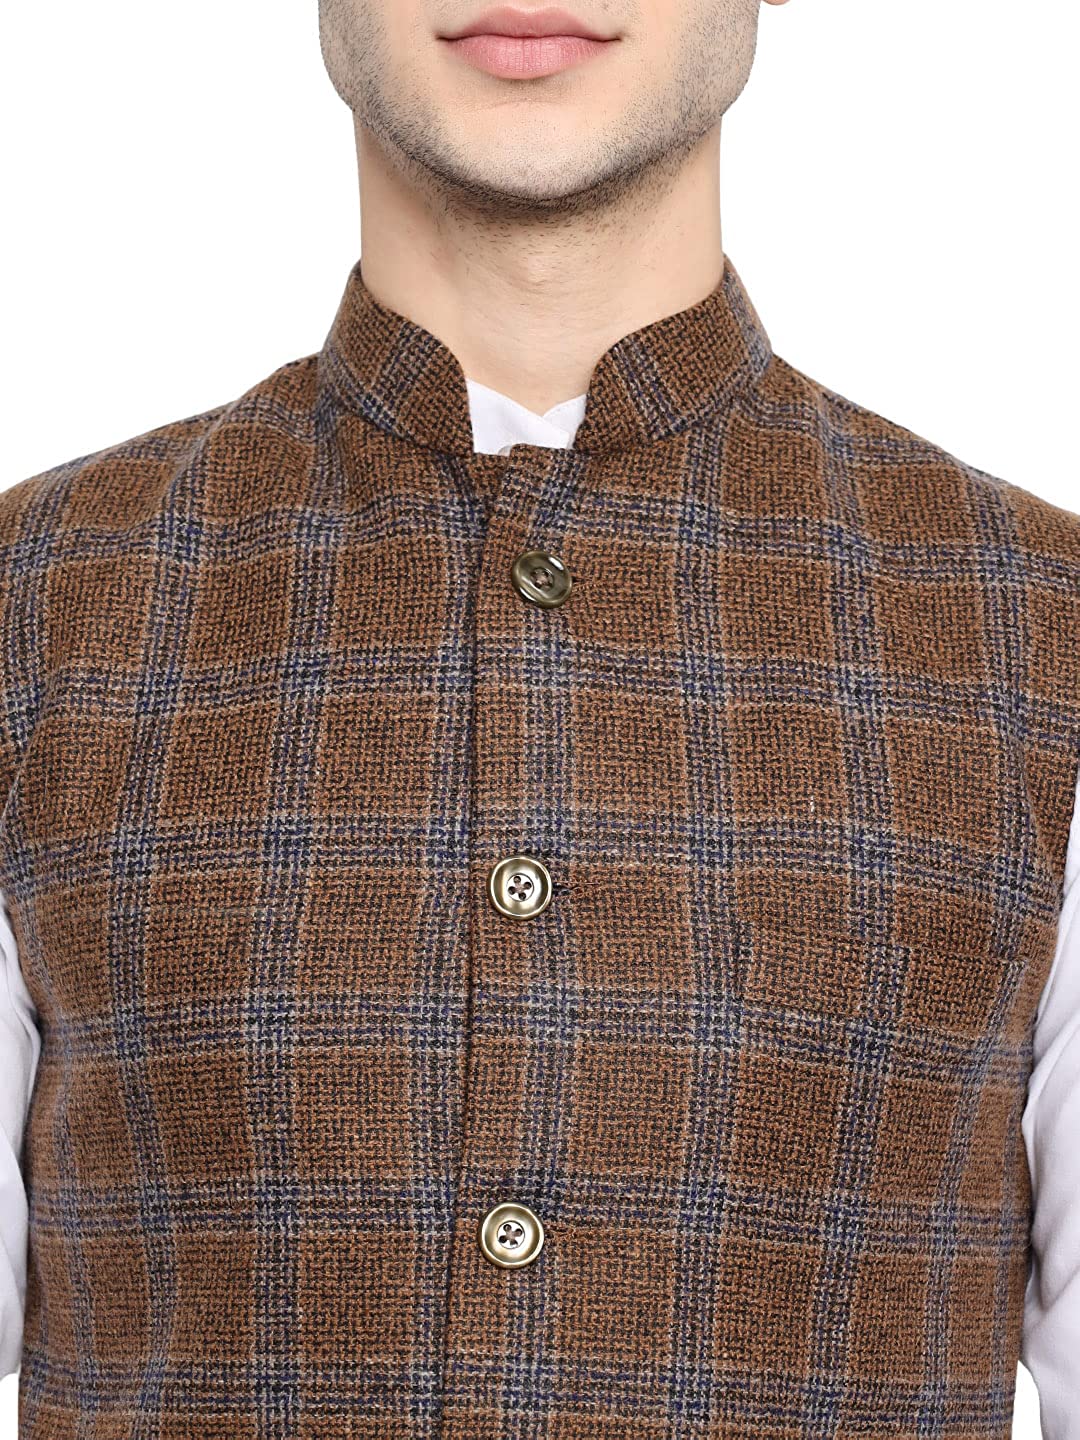 Vatsraa Fusion Modi Jacket Waistcoat Checks Pattern Woolen Nehru Jacket